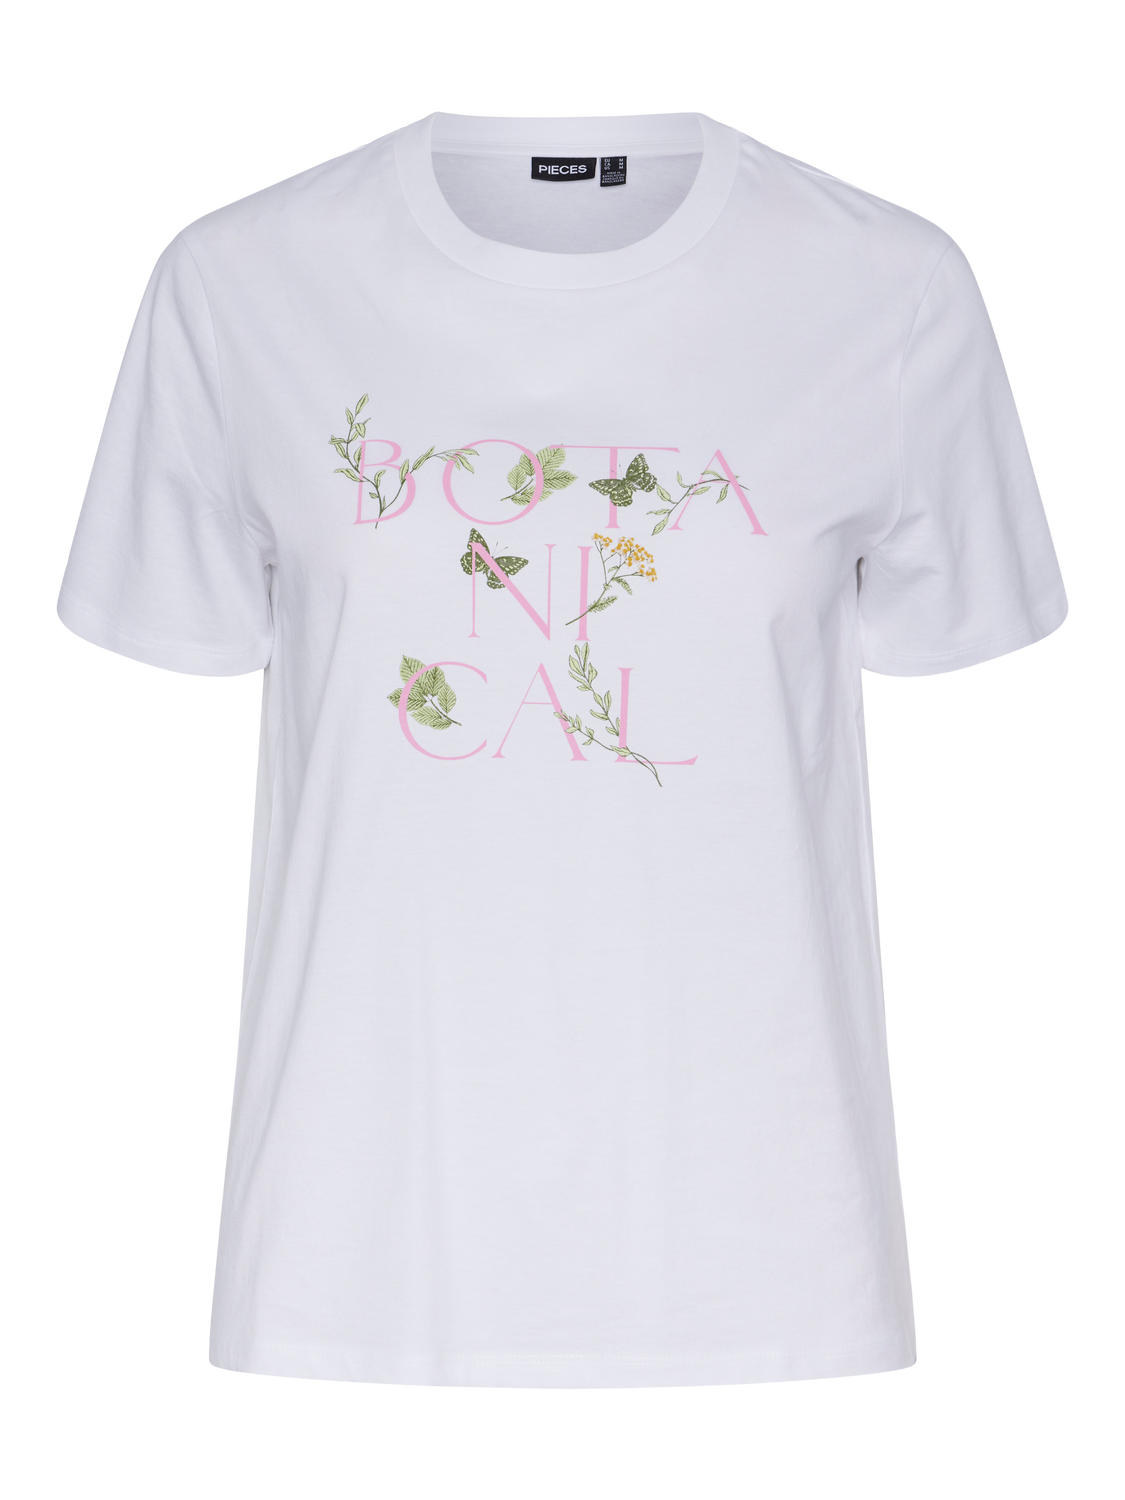 PCMAREN T-Shirt - Bright White